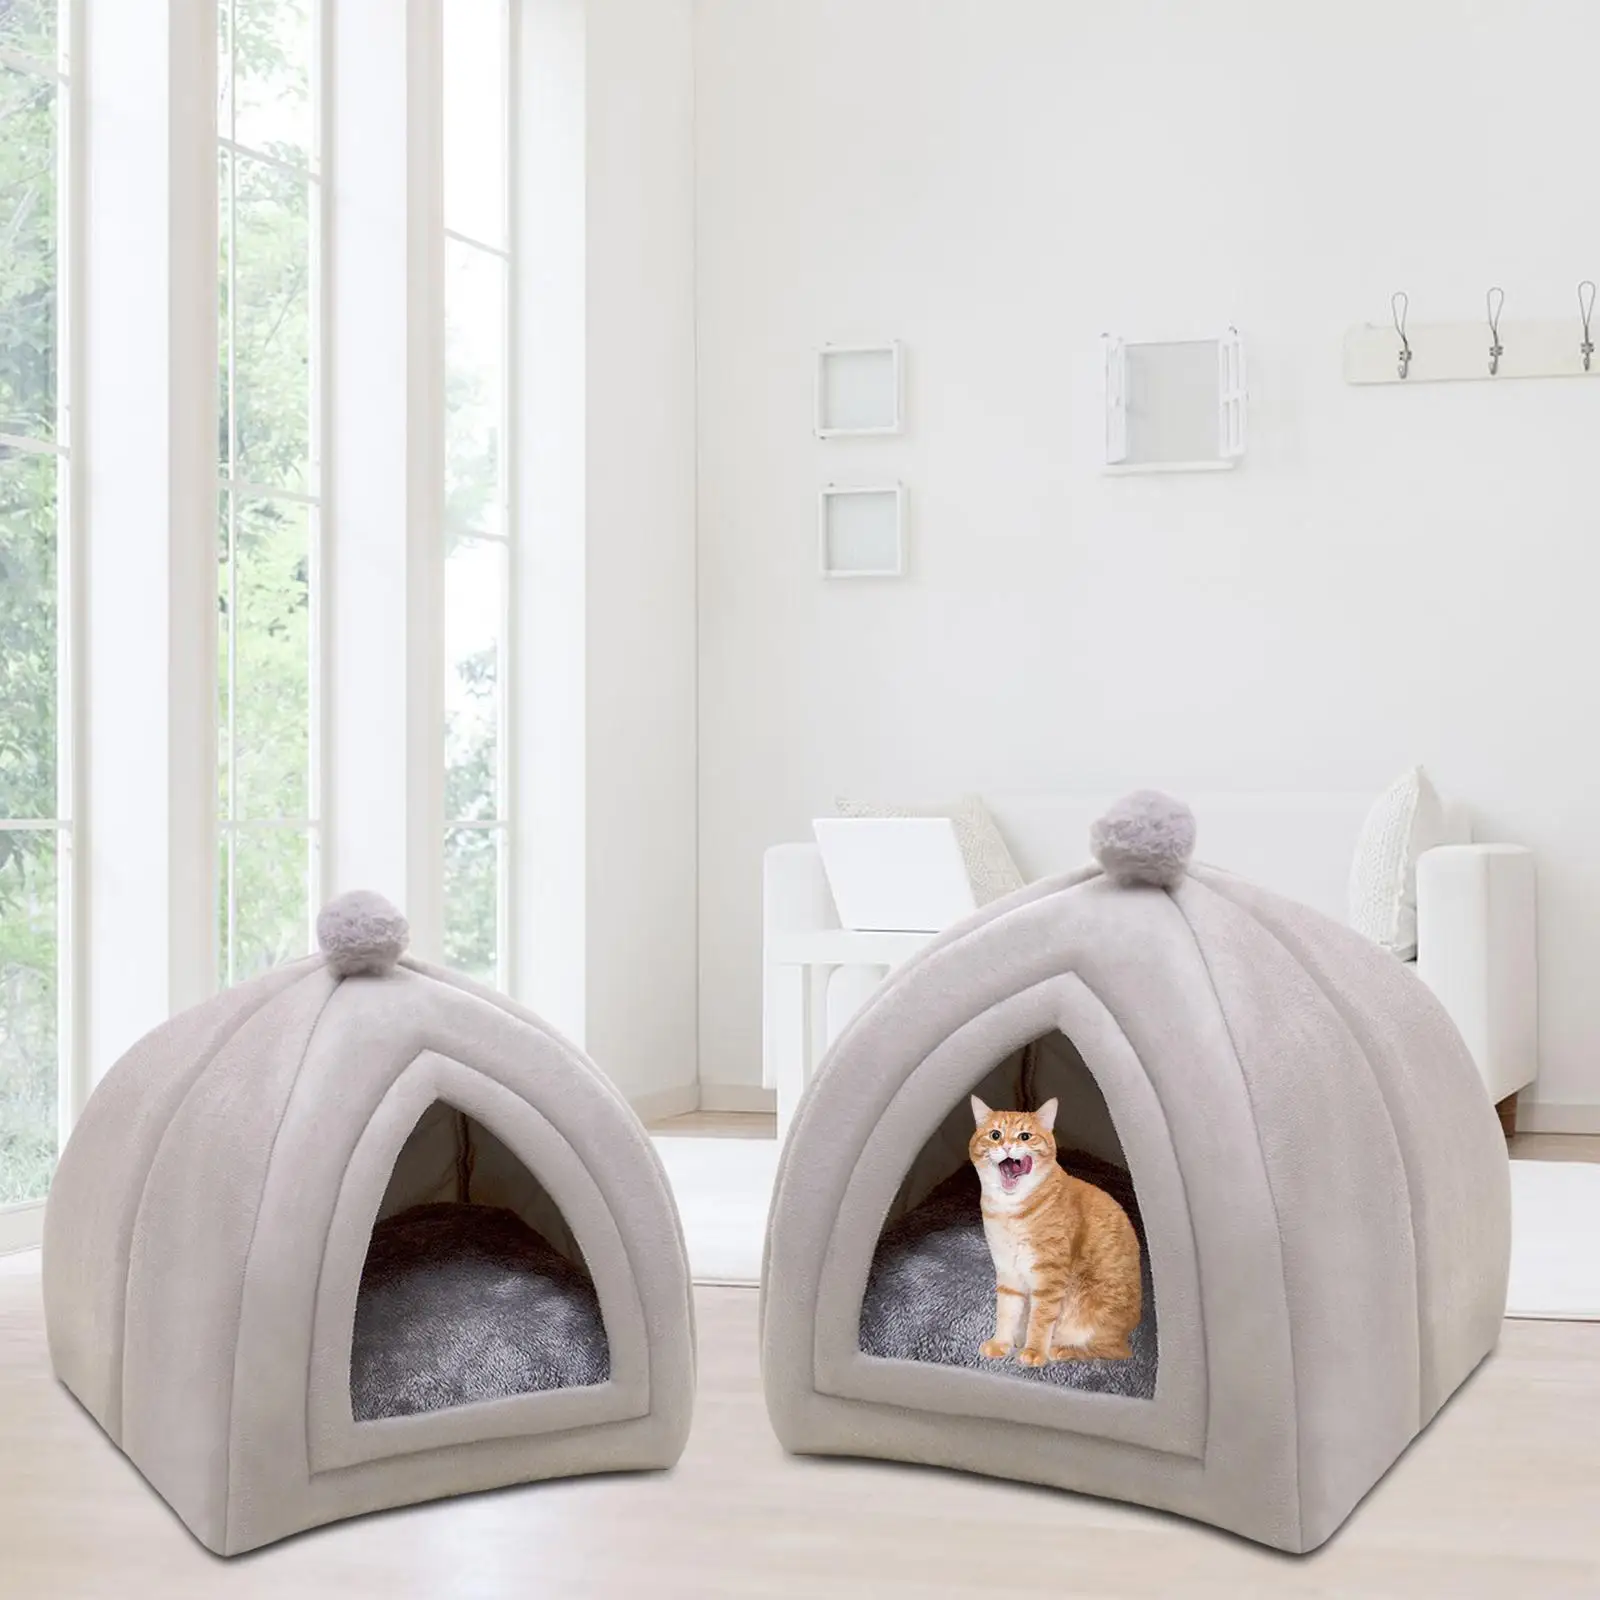 Cute Cat house Cushion Plush warm Kennel Nest Washable for winter Floor Medium Sized Dog Puppy